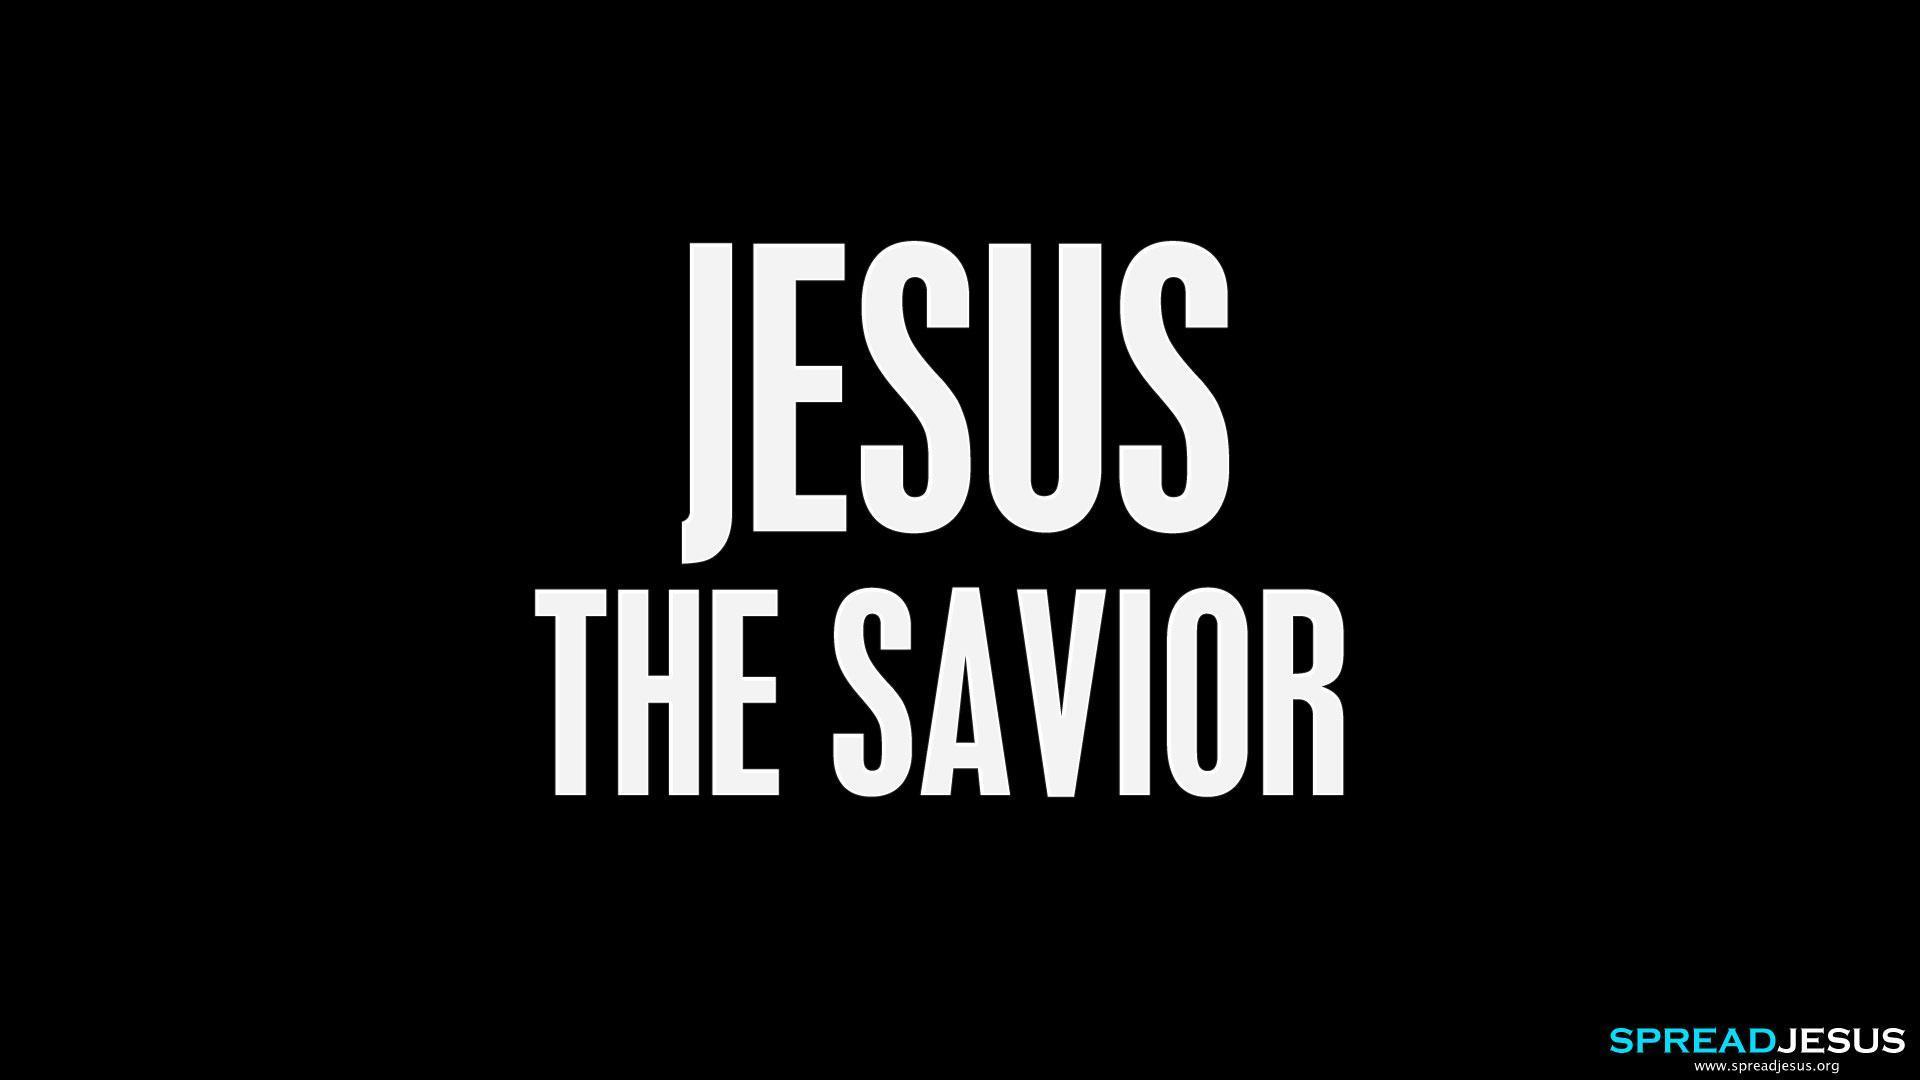 Jesus Christ HD wallpapers free download Jesus The Savior:Jesus